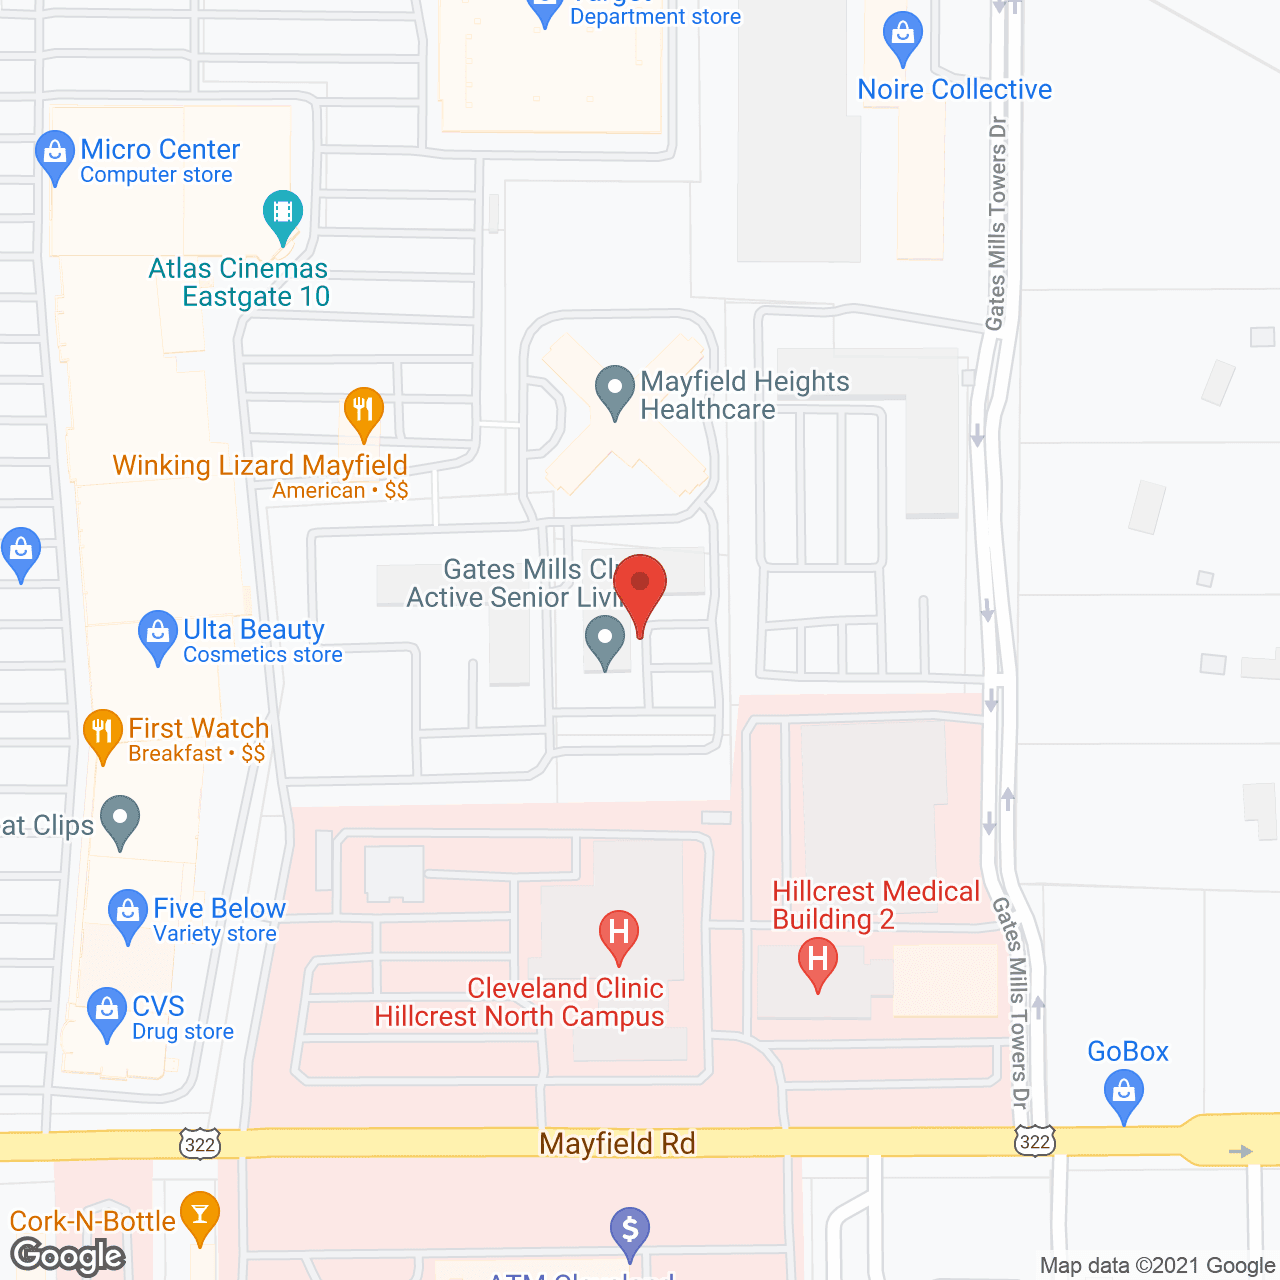 Gates Mills Club in google map